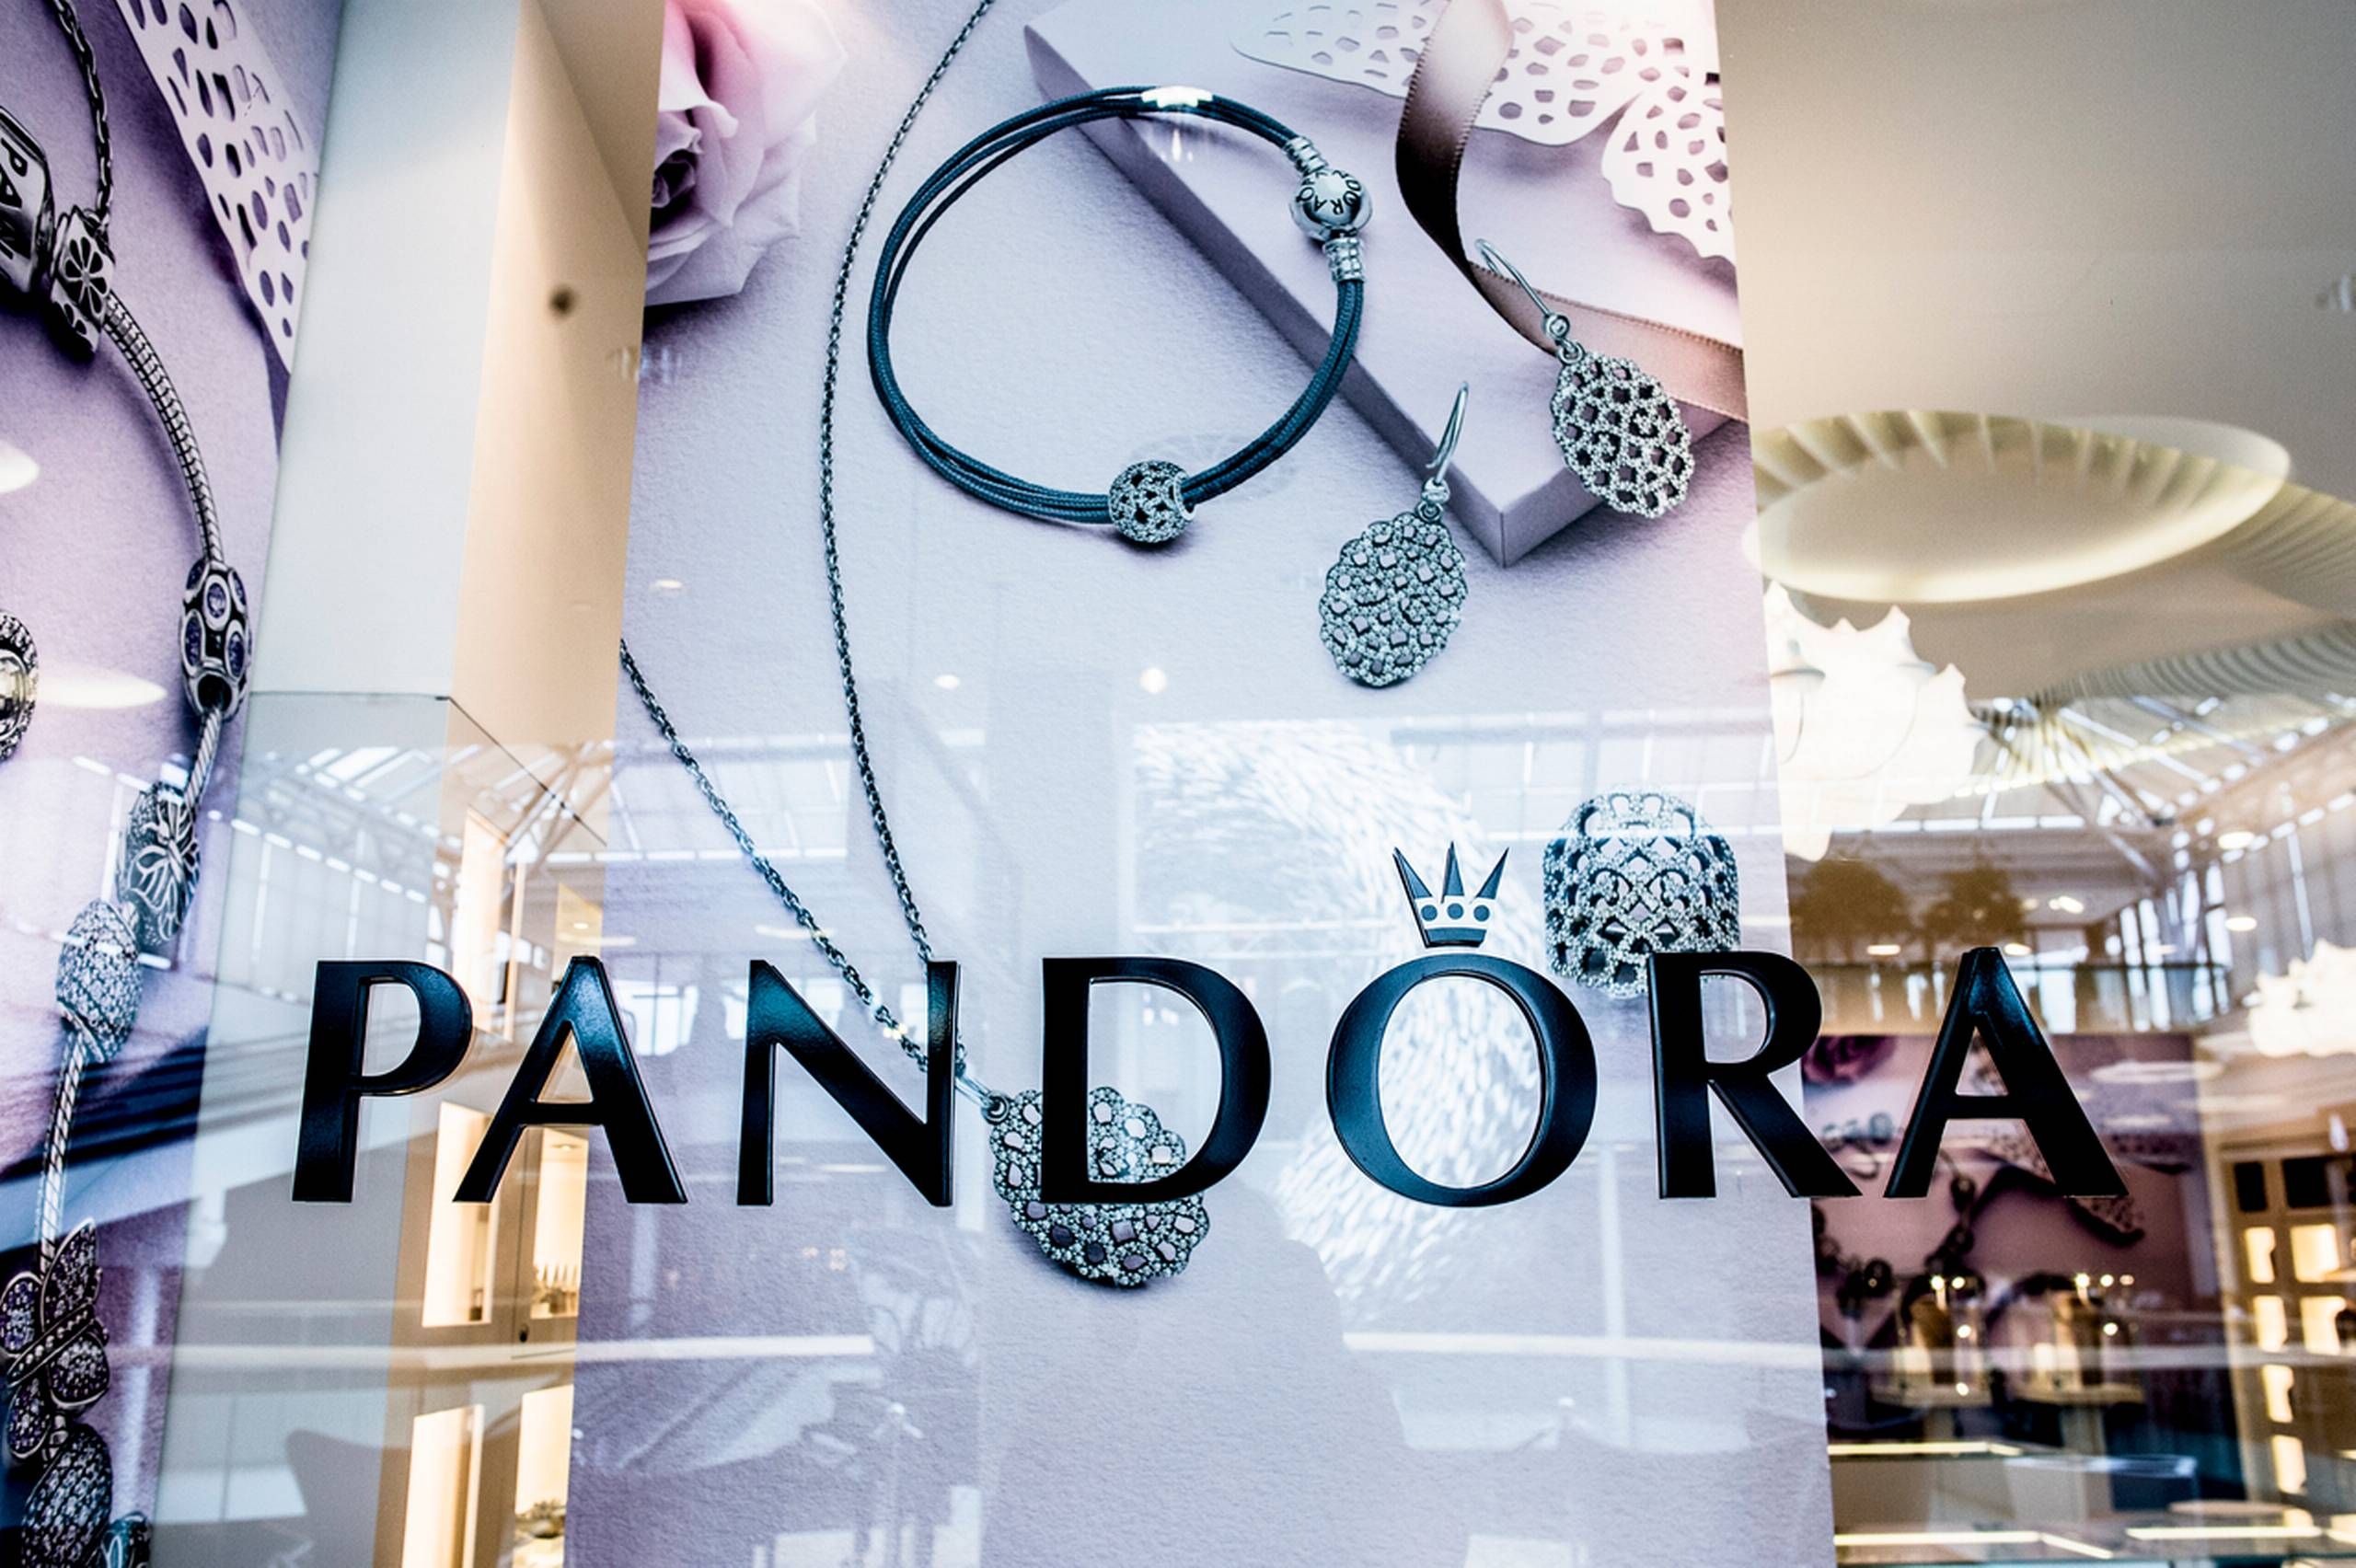 Amerikansk spekulant tabte mod Pandora